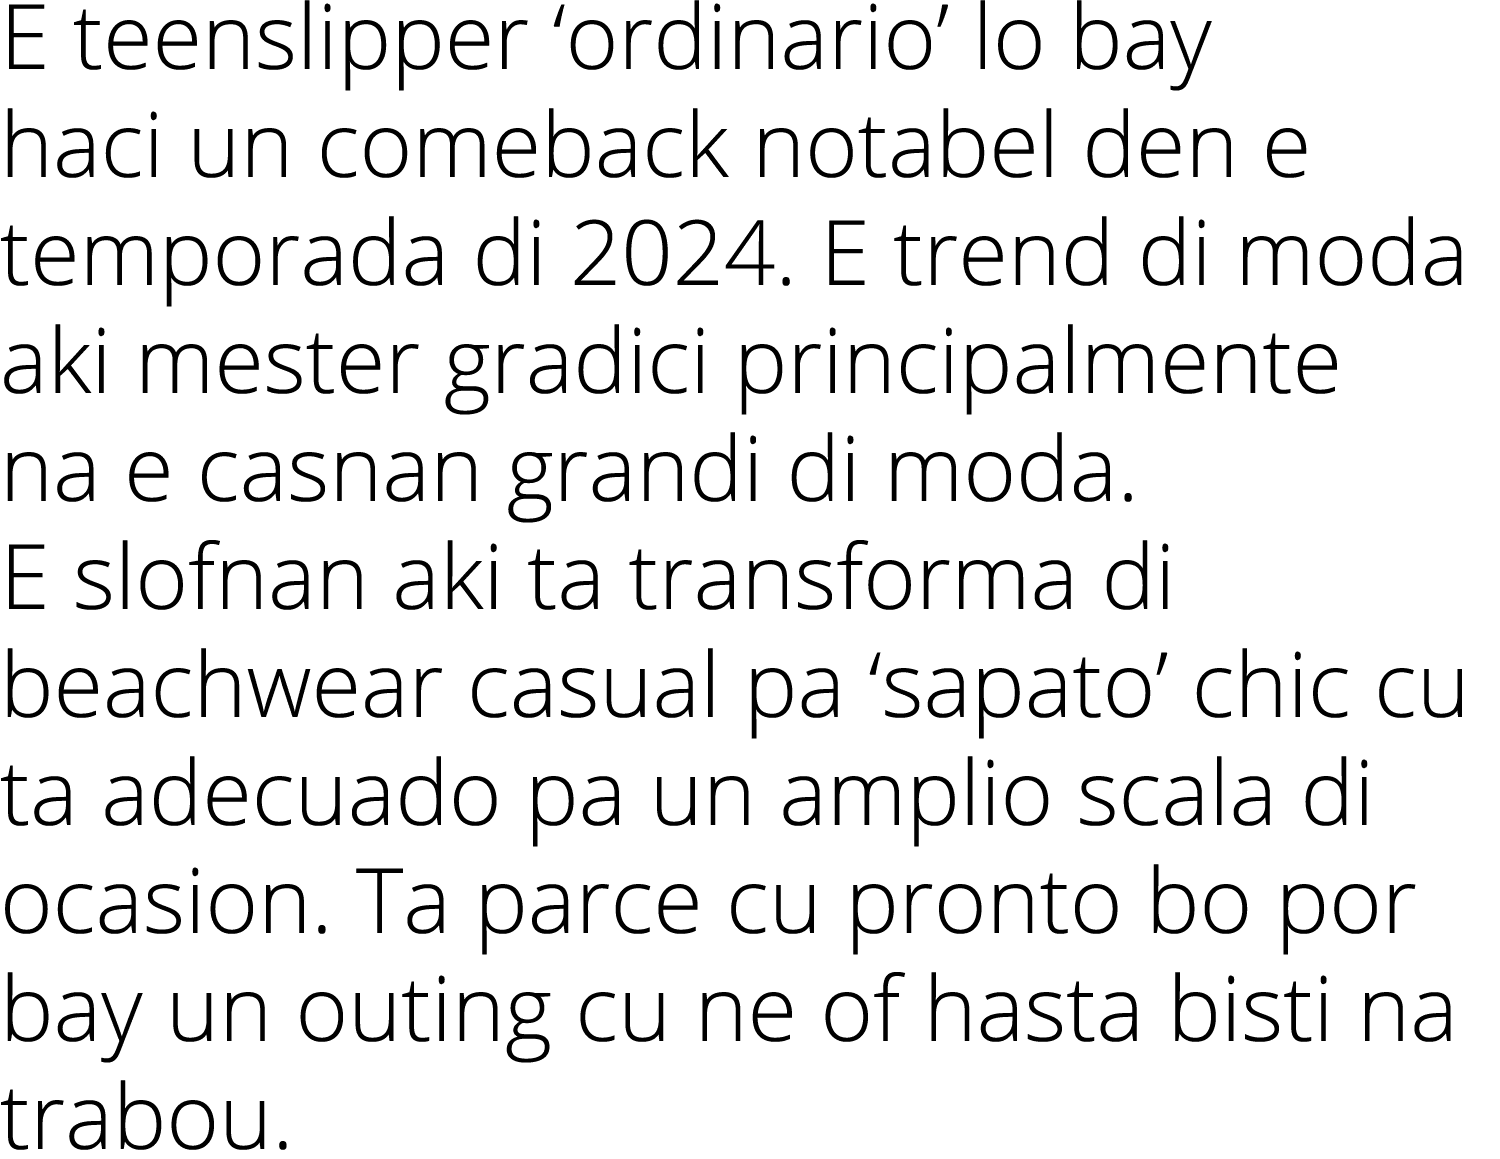 E teenslipper  ordinario  lo bay haci un comeback notabel den e temporada di 2024  E trend di moda aki mester gradici   